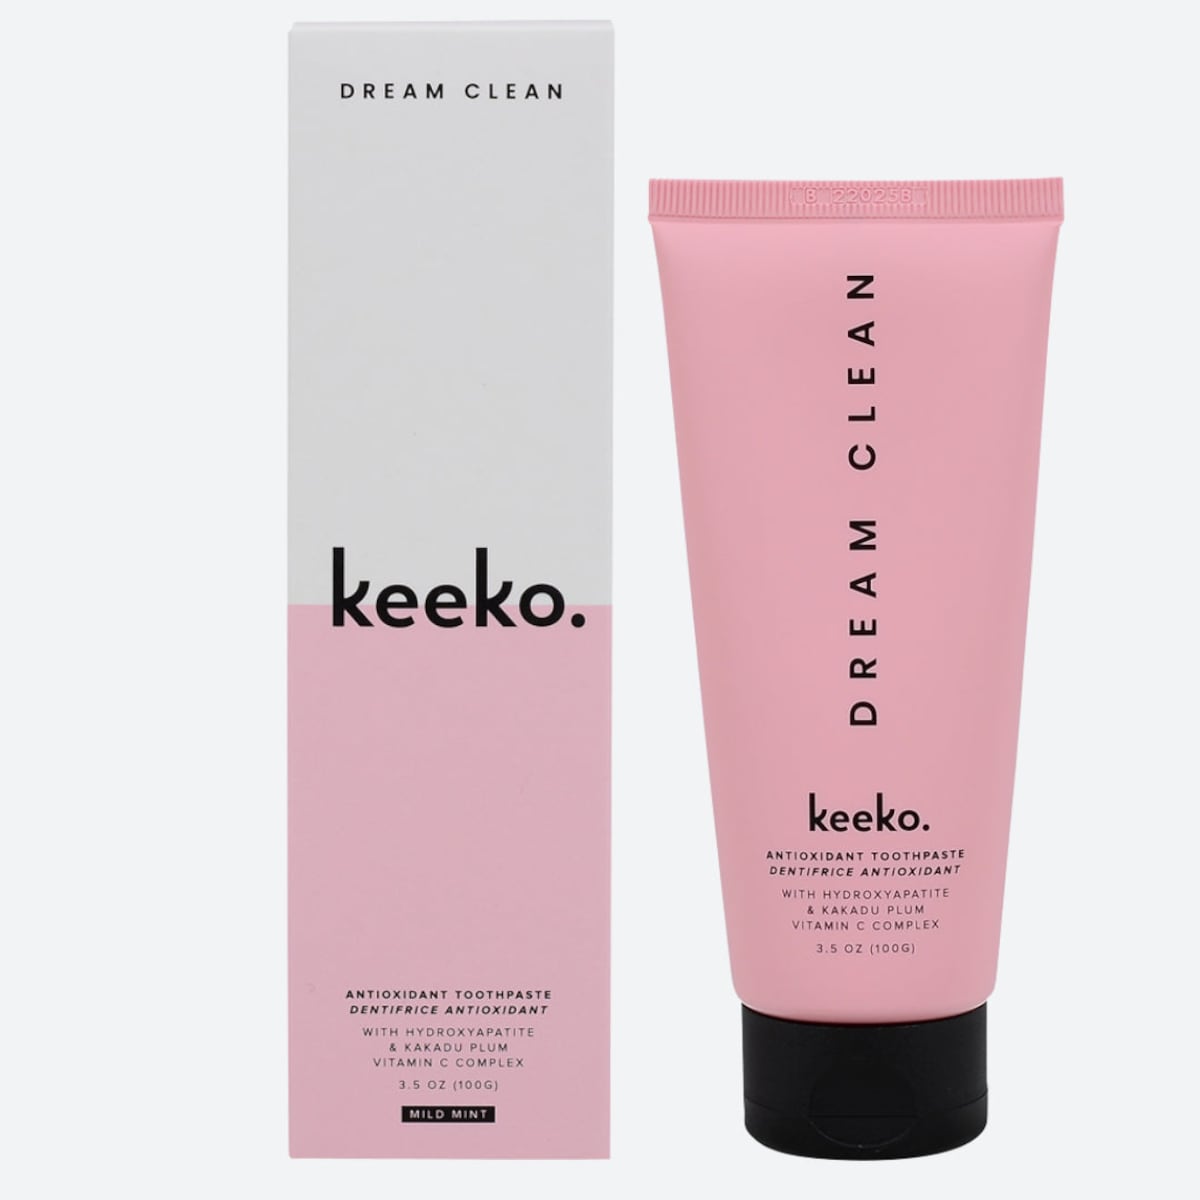 Keeko Dream Clean Antioxidant Toothpaste 100g